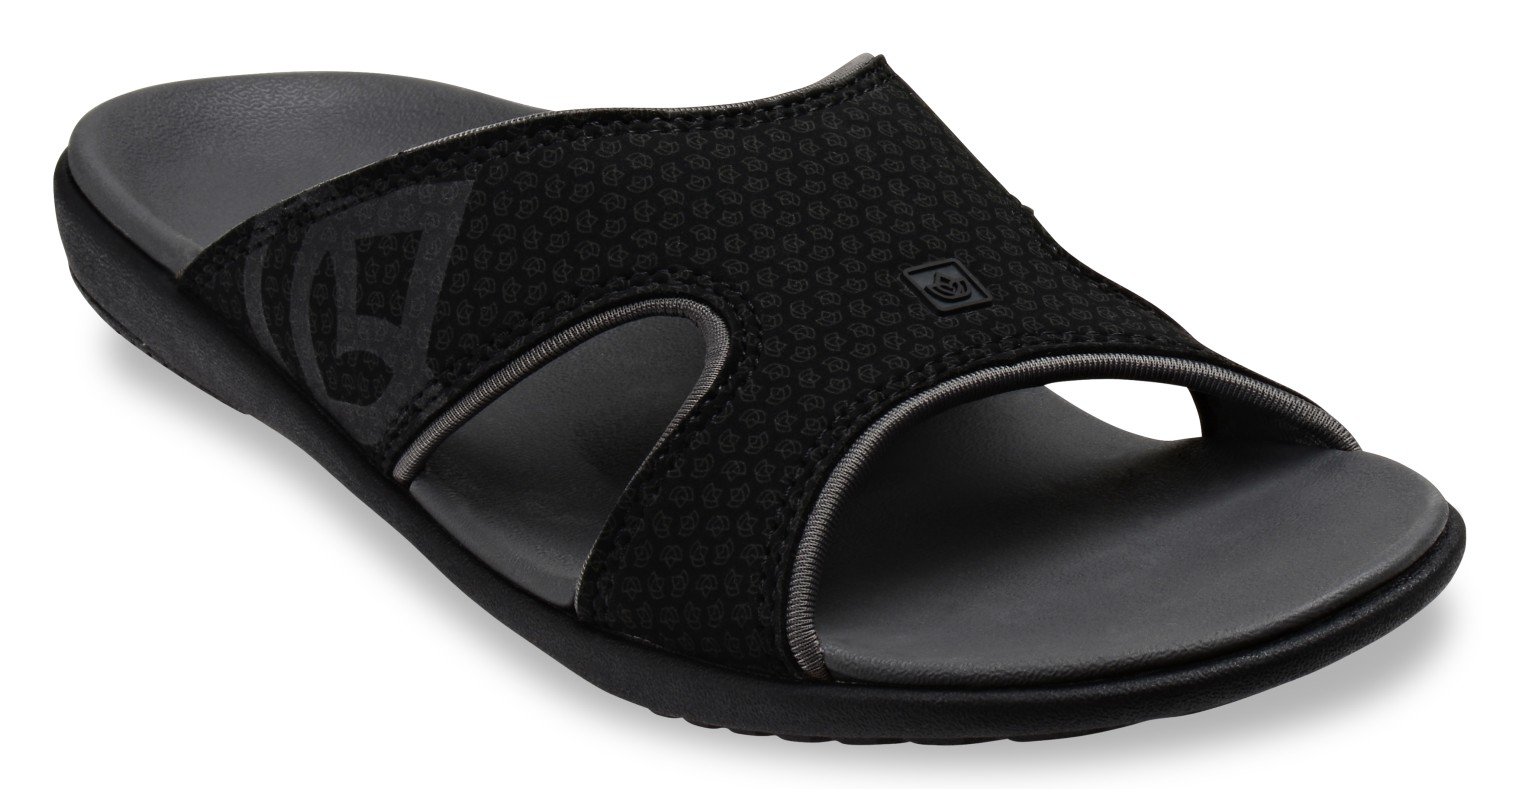 Spenco Kholo Women's Orthotic Slide Sandals Patterned Oynx - 8 Medium ...